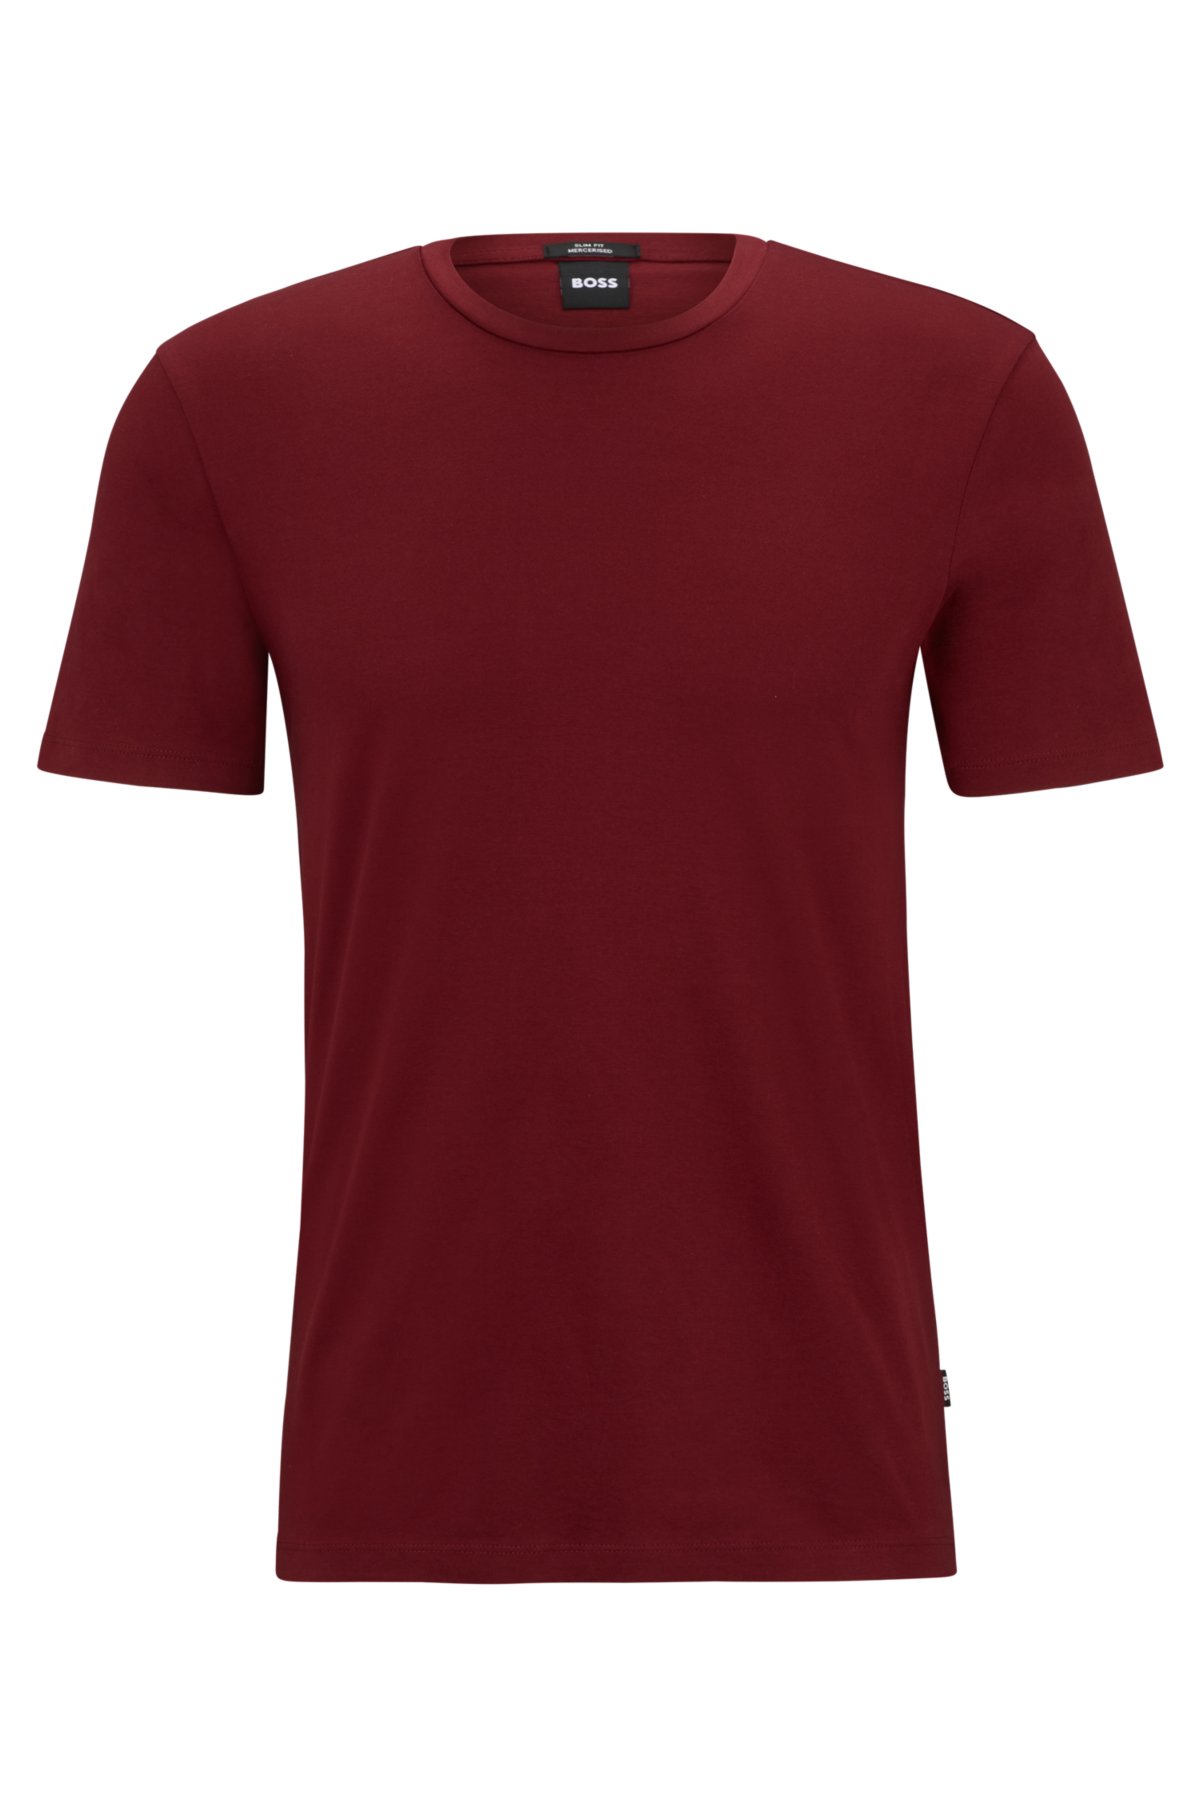 Cathalem Slim Fit T Shirts Men Heavyweight Cotton Short Sleeve Crewneck Tee  Top Tshirts Regular,Black L